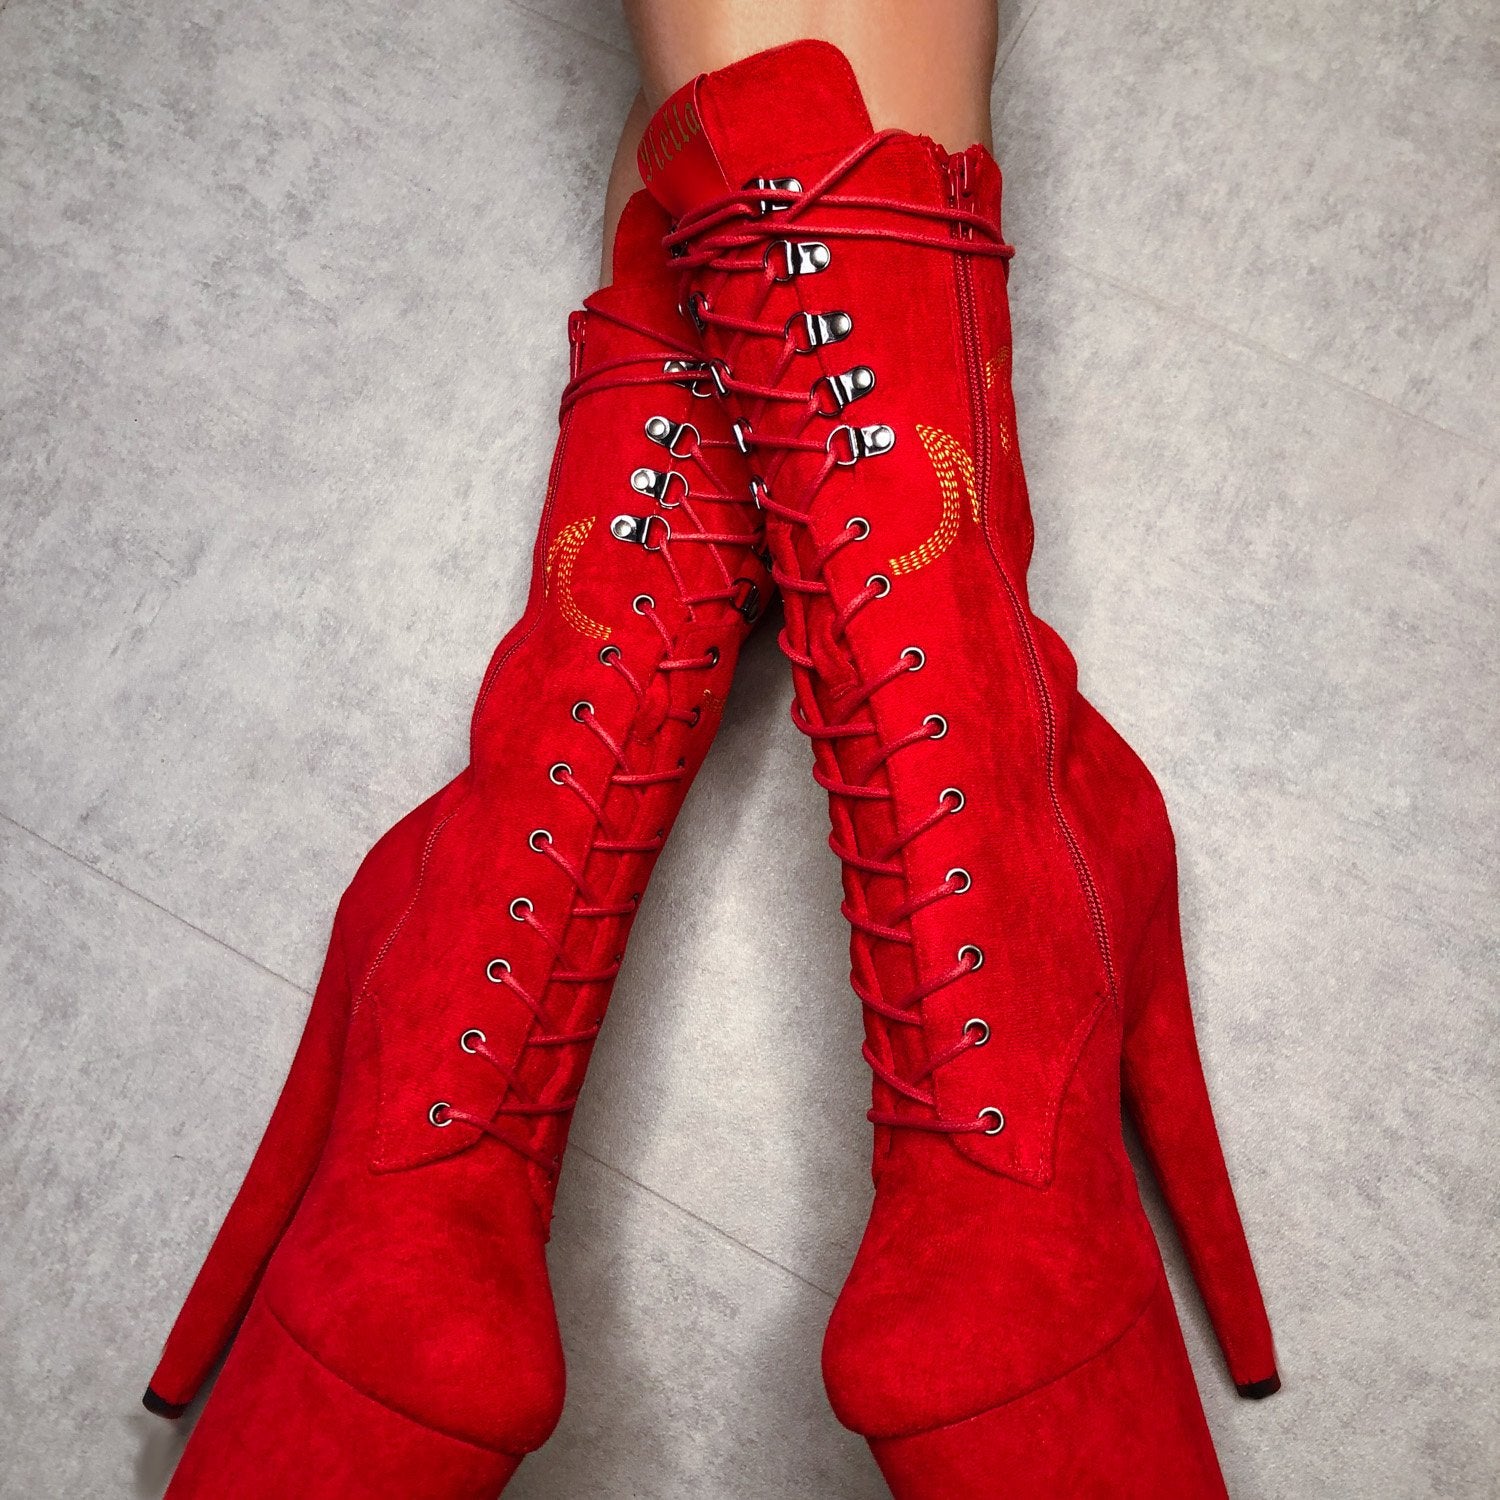 HellGirl Red/Yellow Front Lace - 7 INCH, stripper shoe, stripper heel, pole heel, not a pleaser, platform, dancer, pole dance, floor work